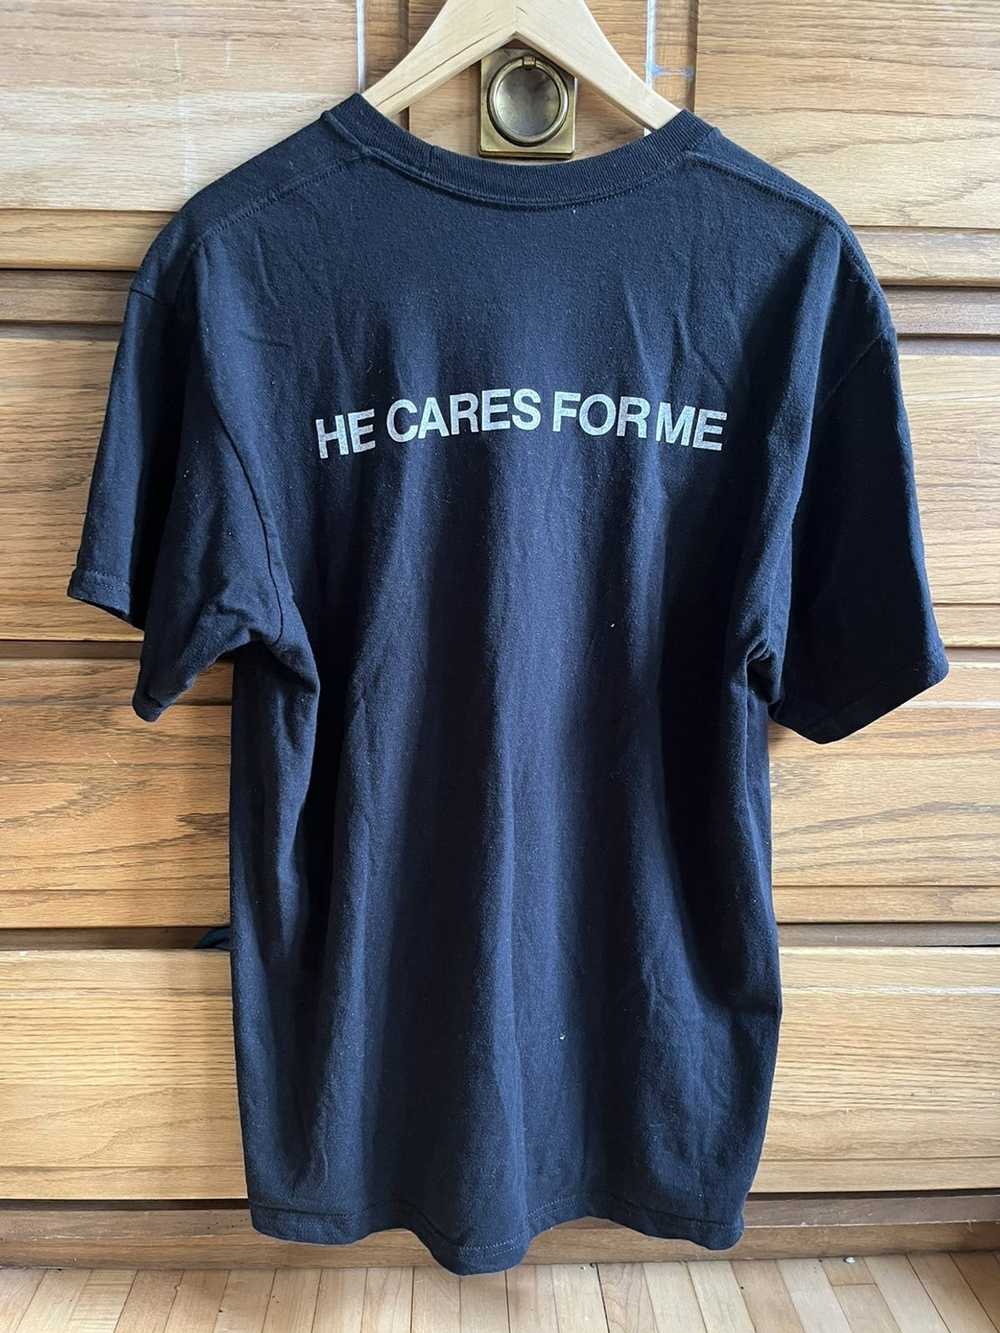 Saba Saba “Care For Me” Album T-Shirt - image 2